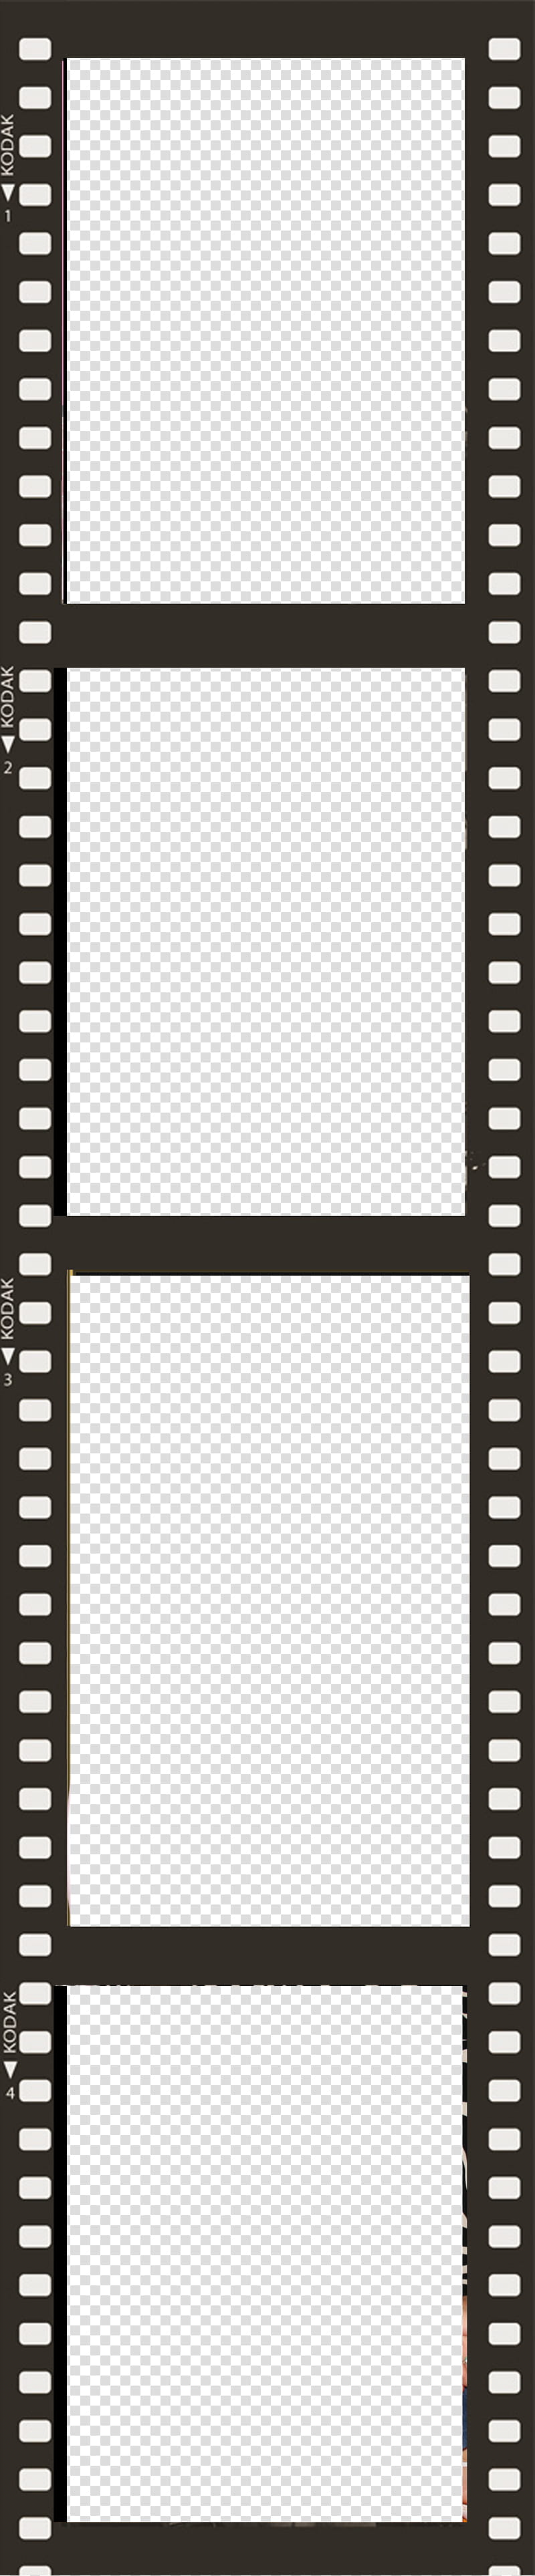 film strip transparent background PNG clipart